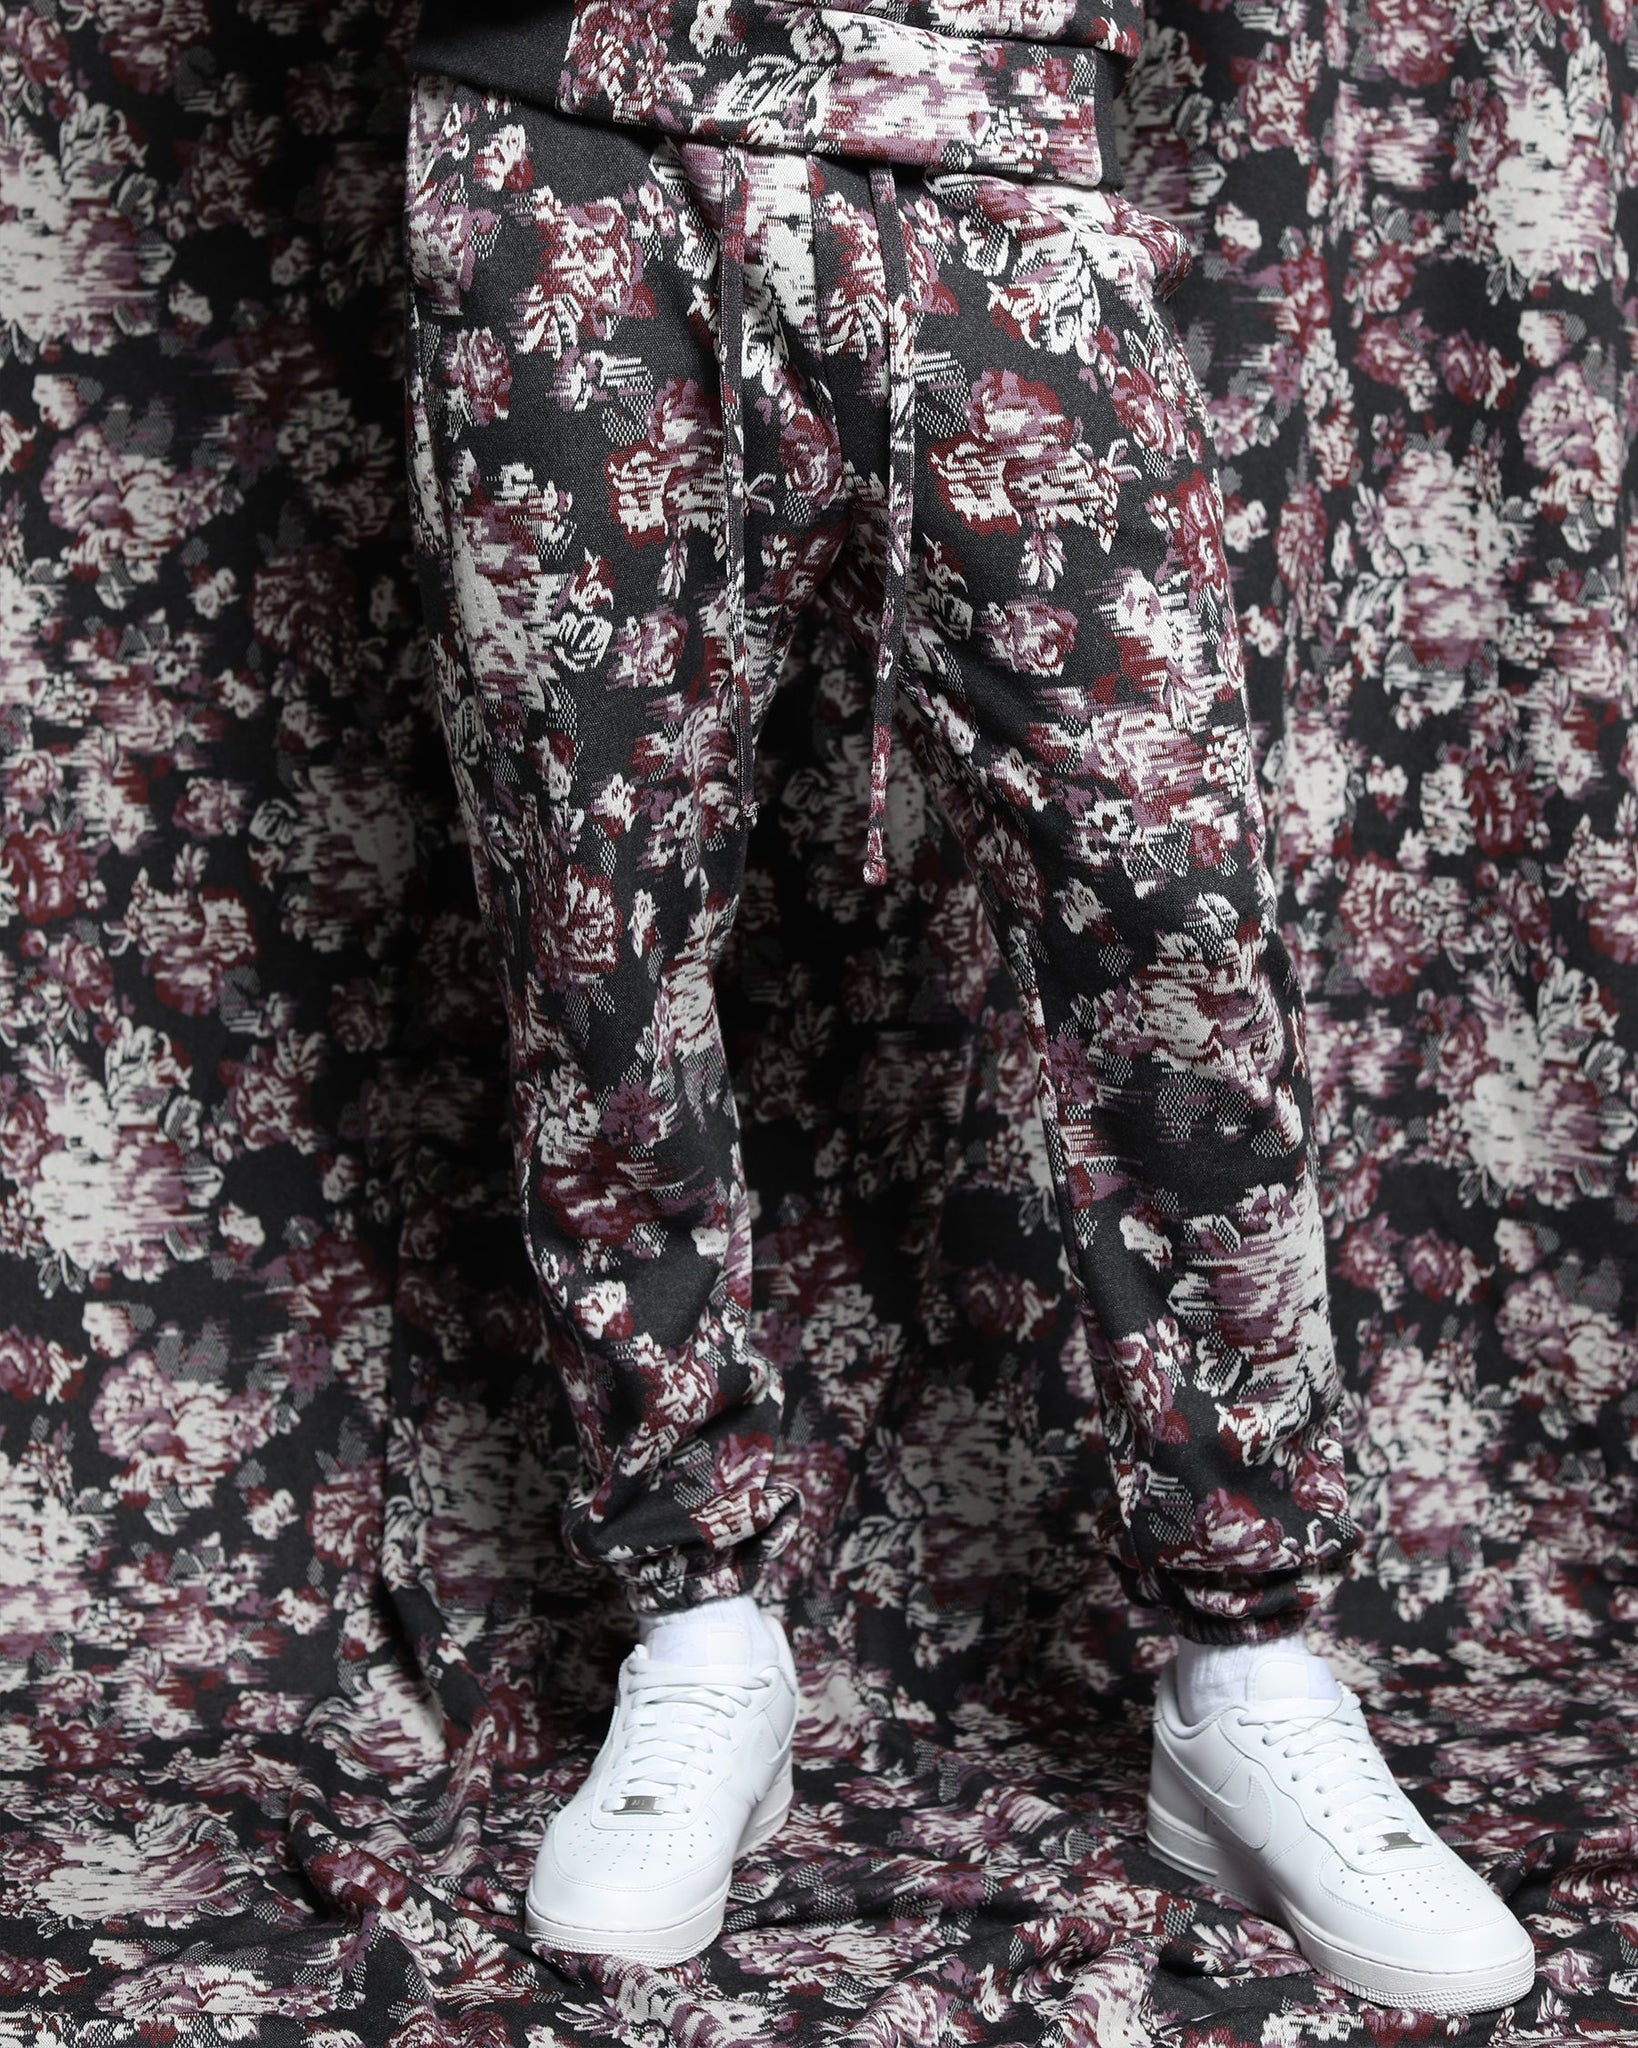 Floral Glitch Hyper Reality Knit Pant-Mens-Twenty